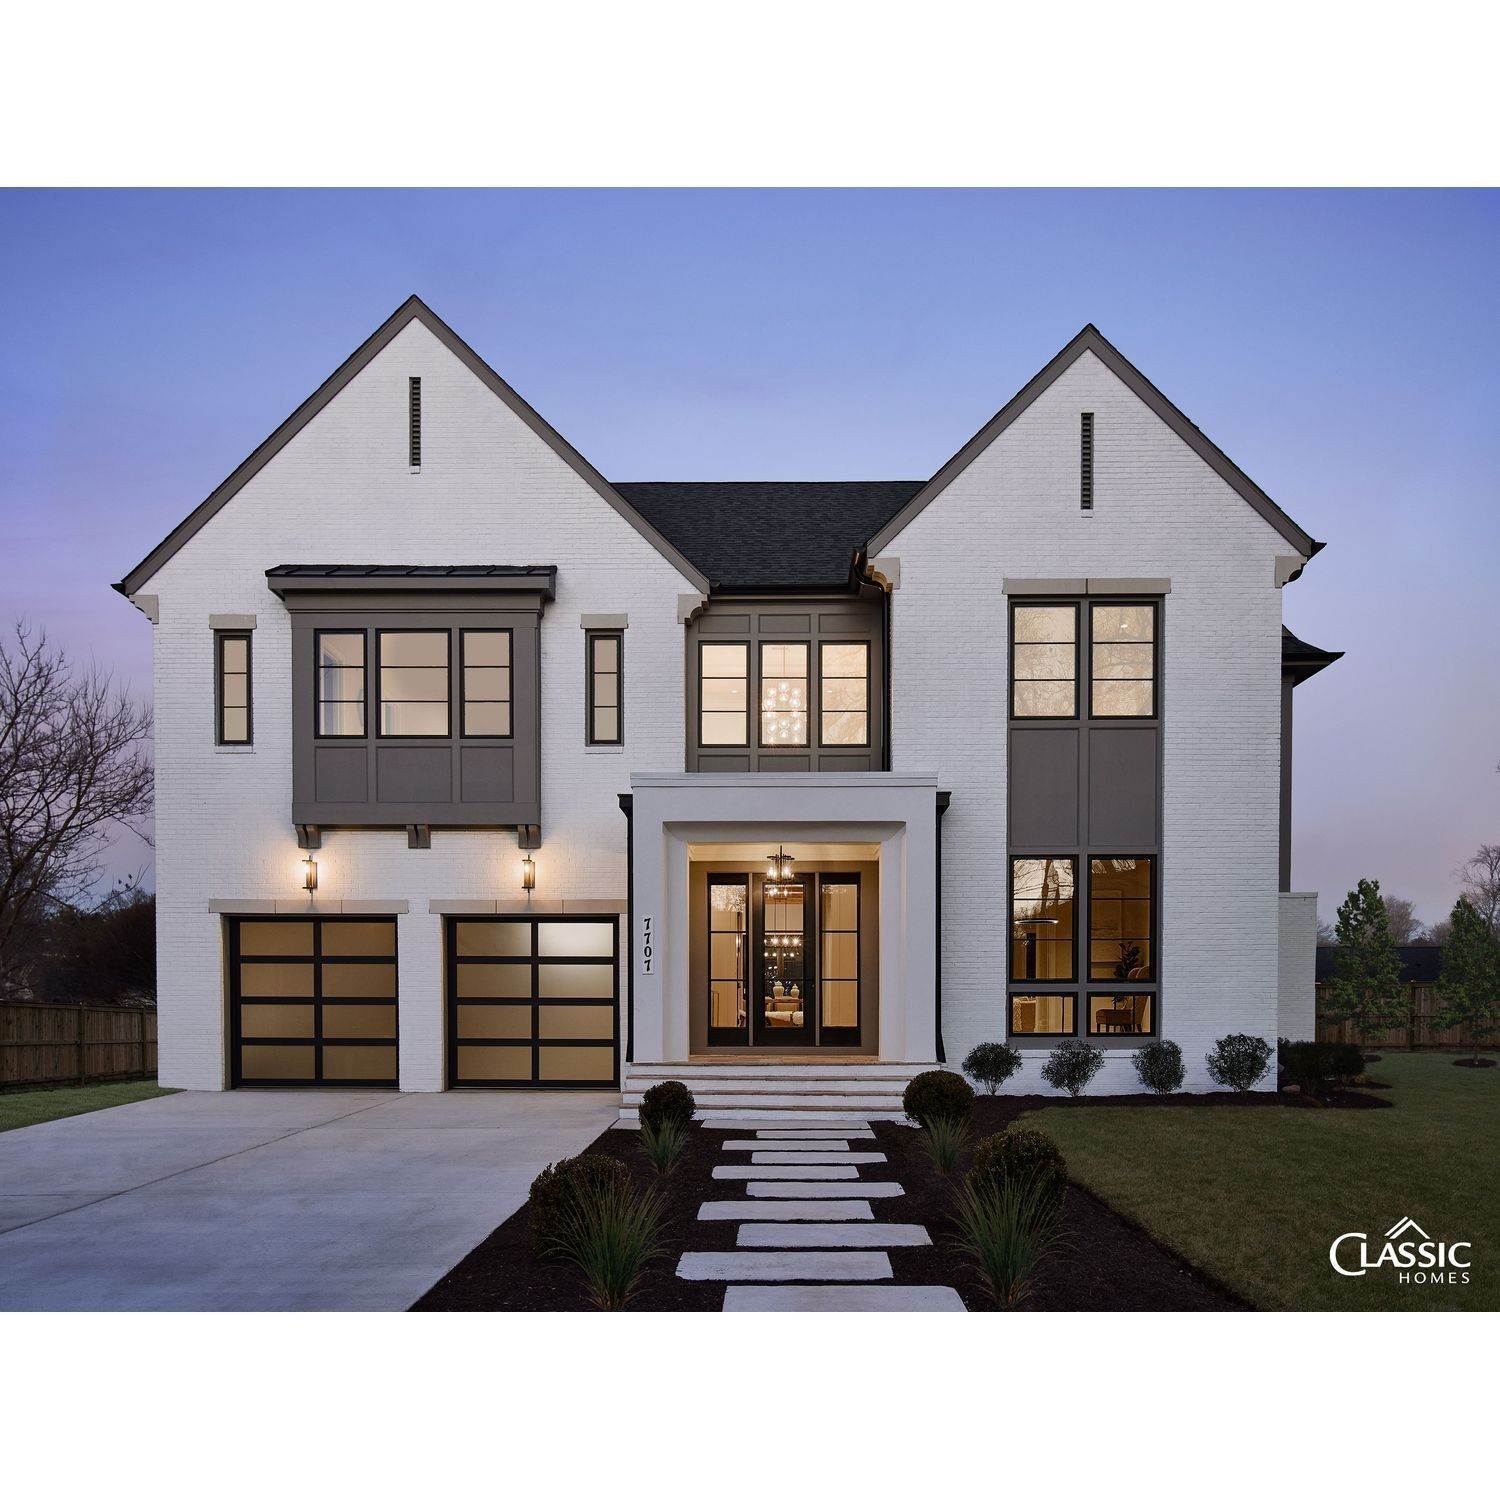 Classic Homes of Maryland - Custom Home Builder (Bethesda)建于 贝塞斯达, MD 20817